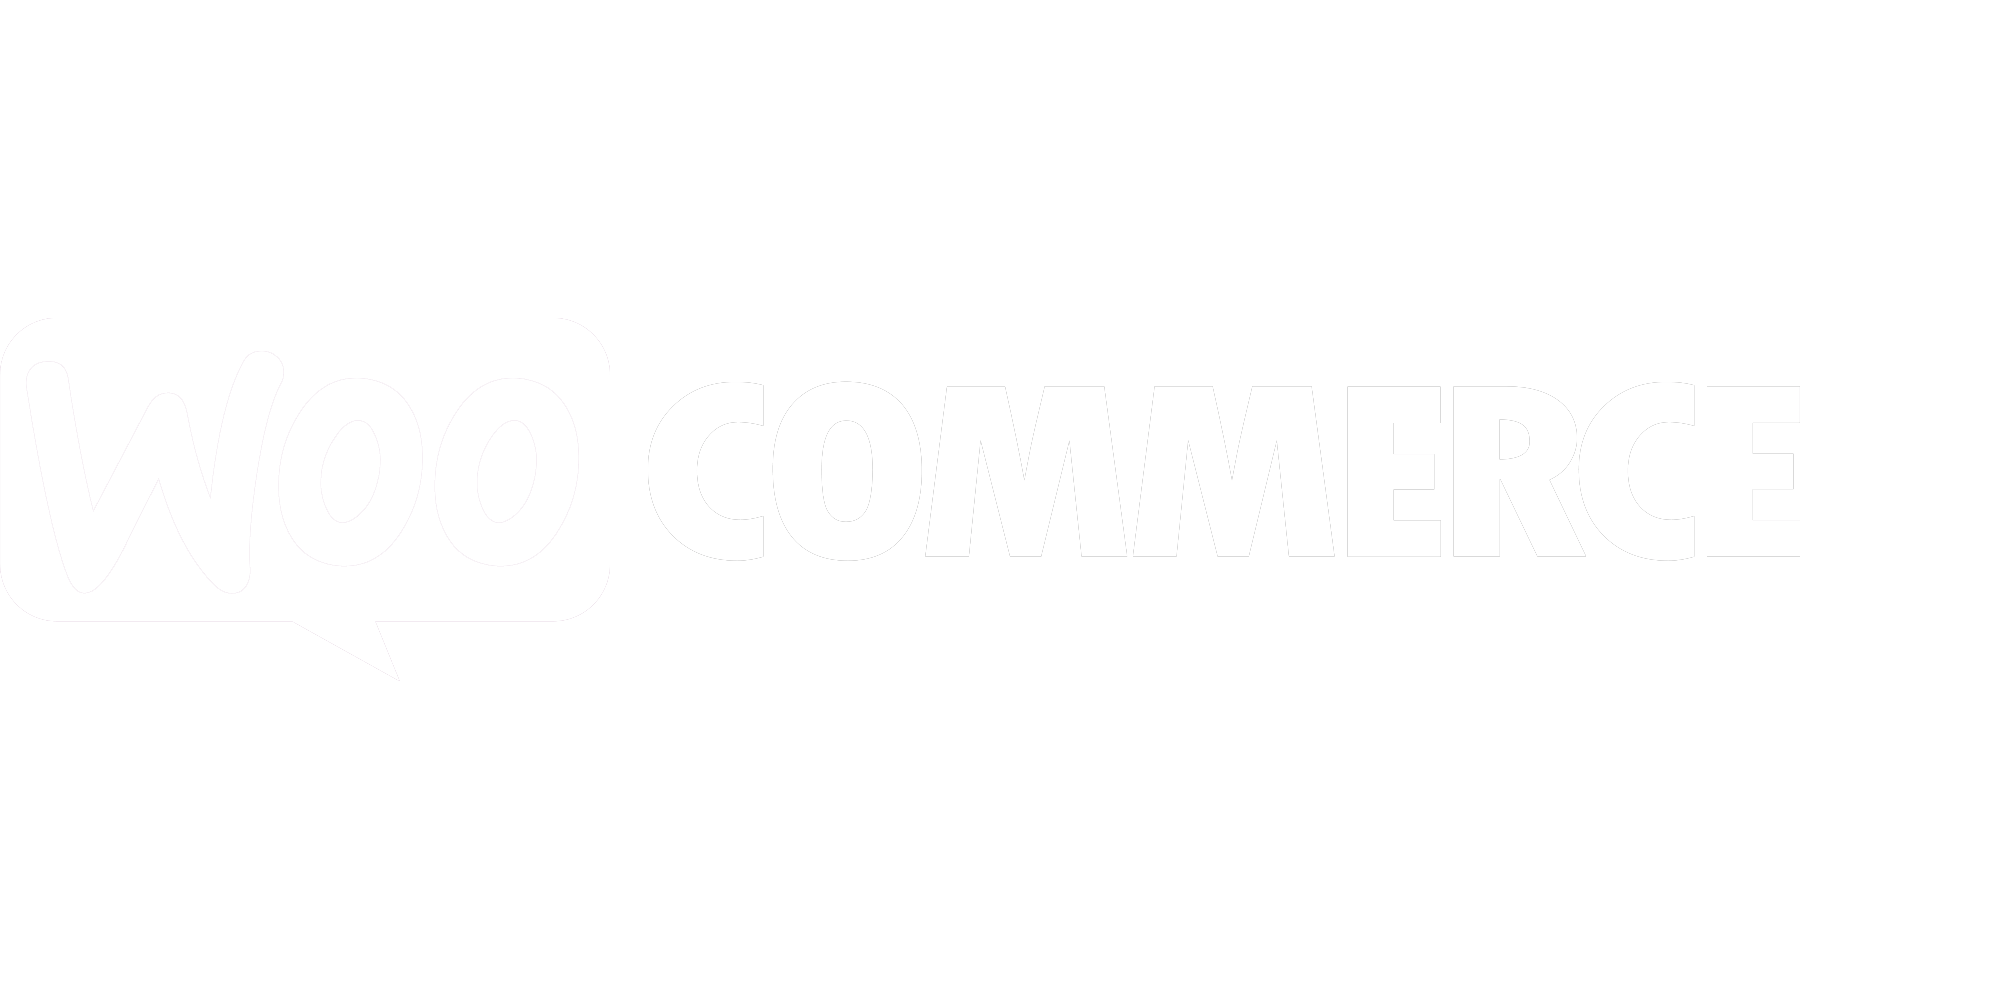 Digital Marketing Agency - About Us logo woocommerce